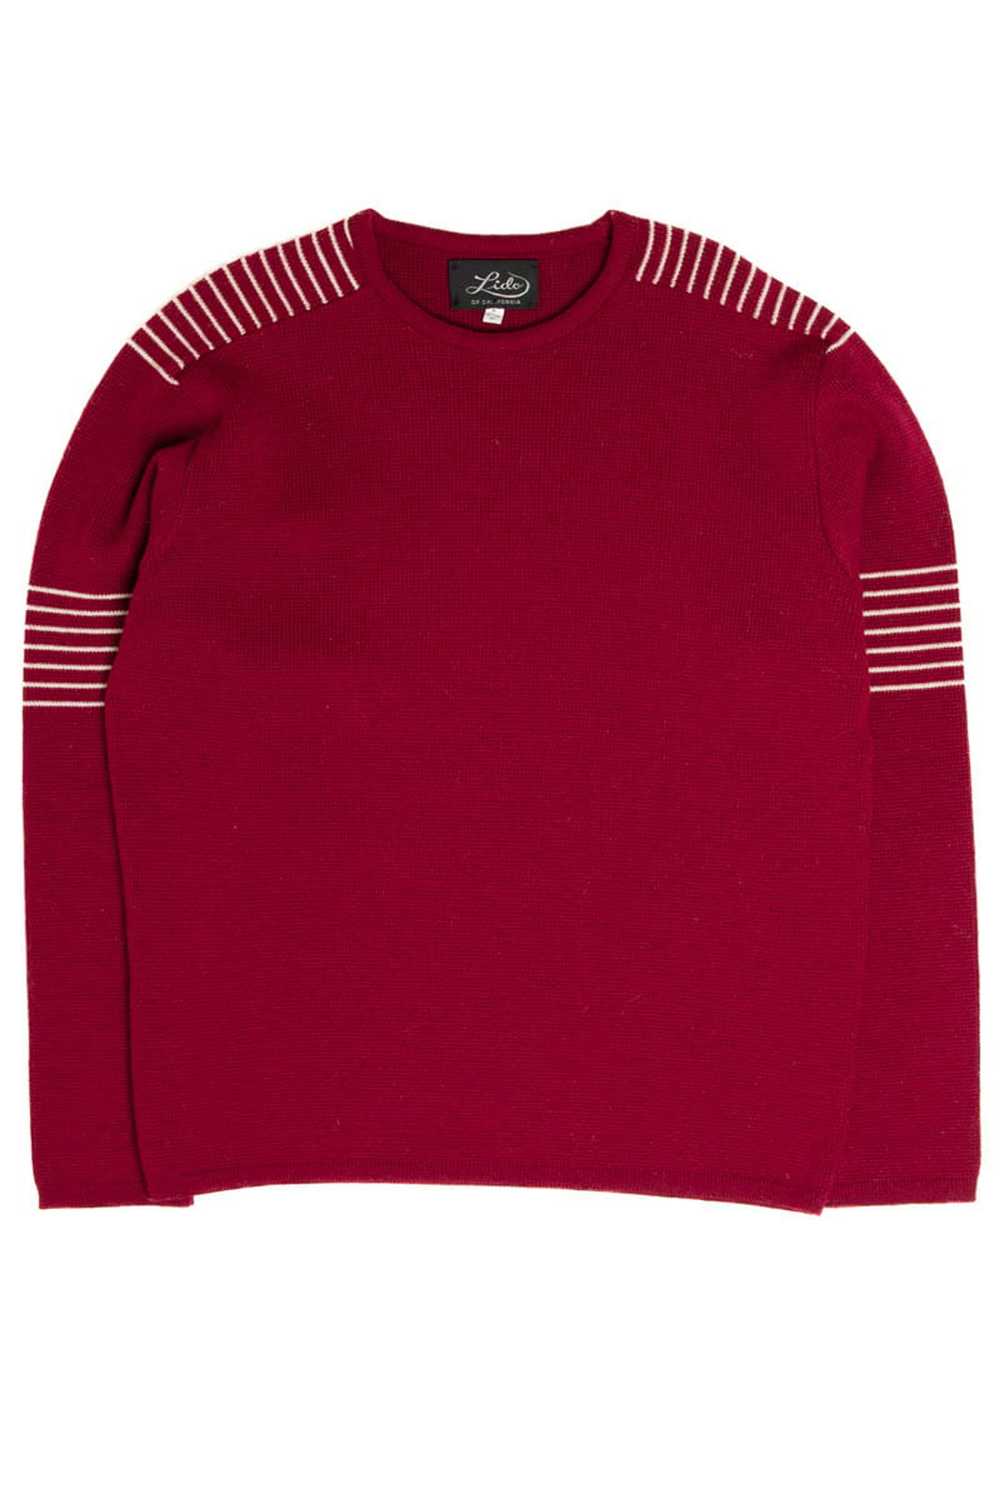 Burgundy Striped Sweater - image 2